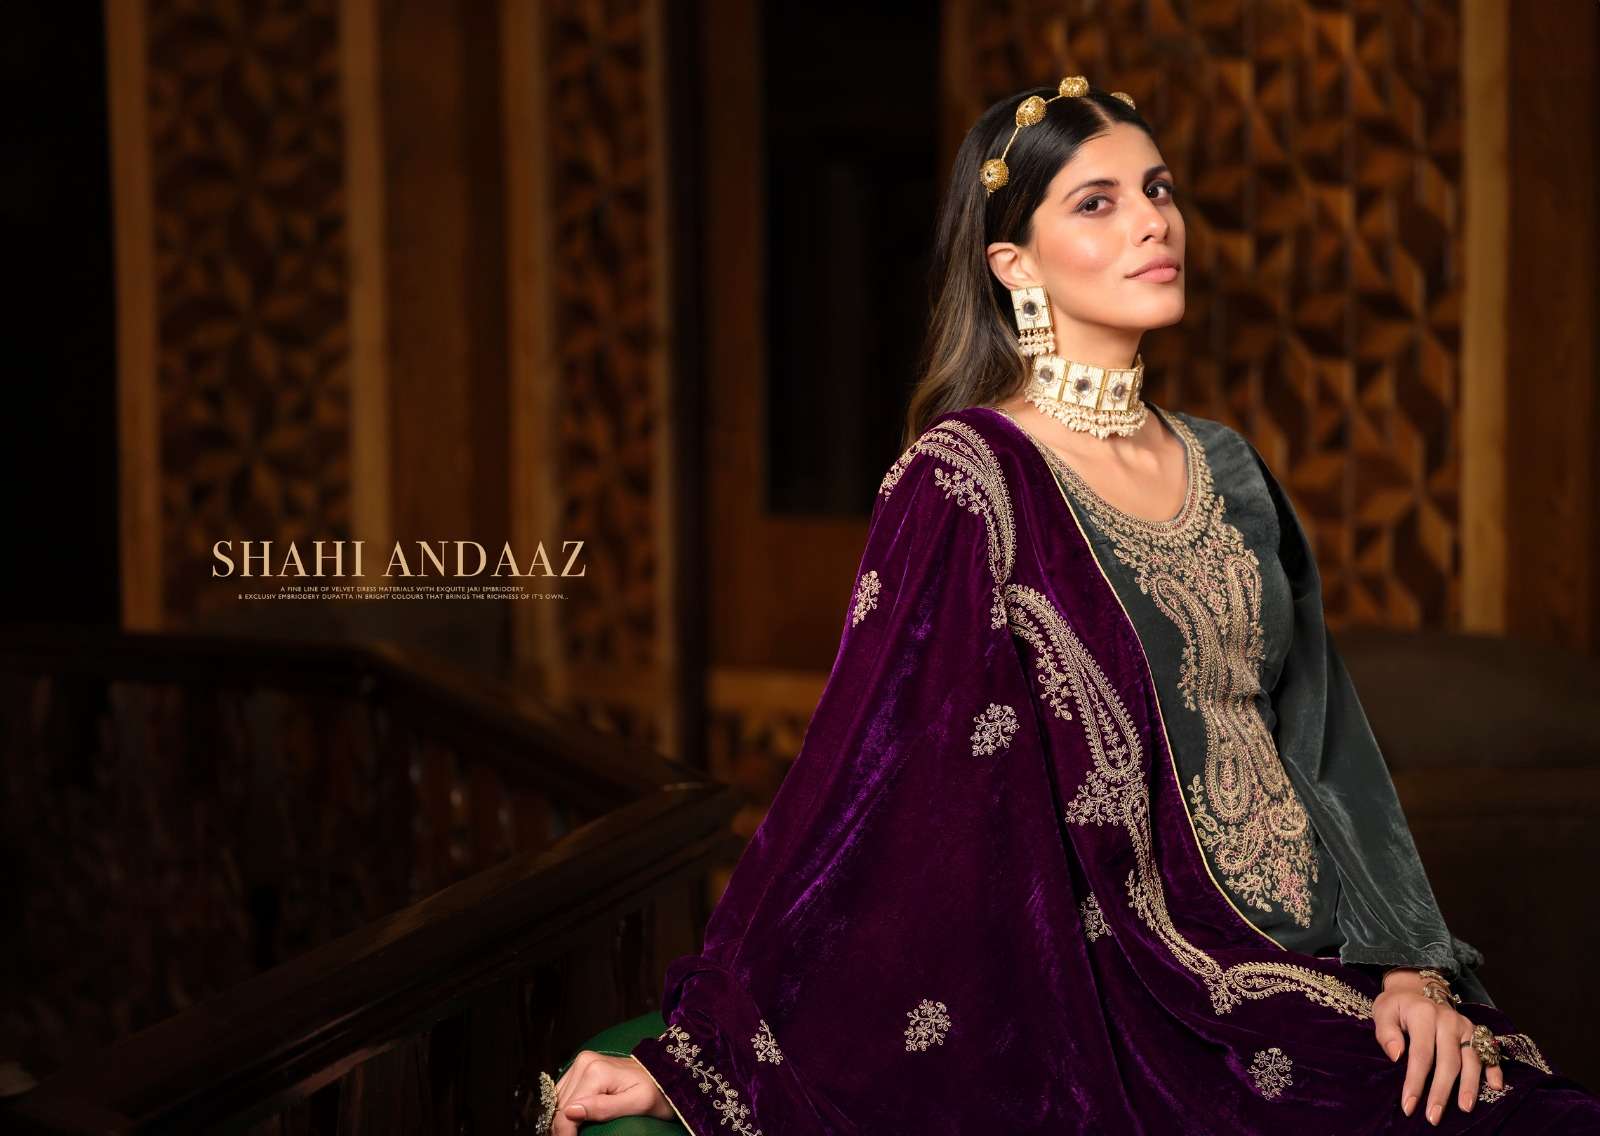 belliza designer studio shahi andaaz velvet new and modern look salwar suit catalog